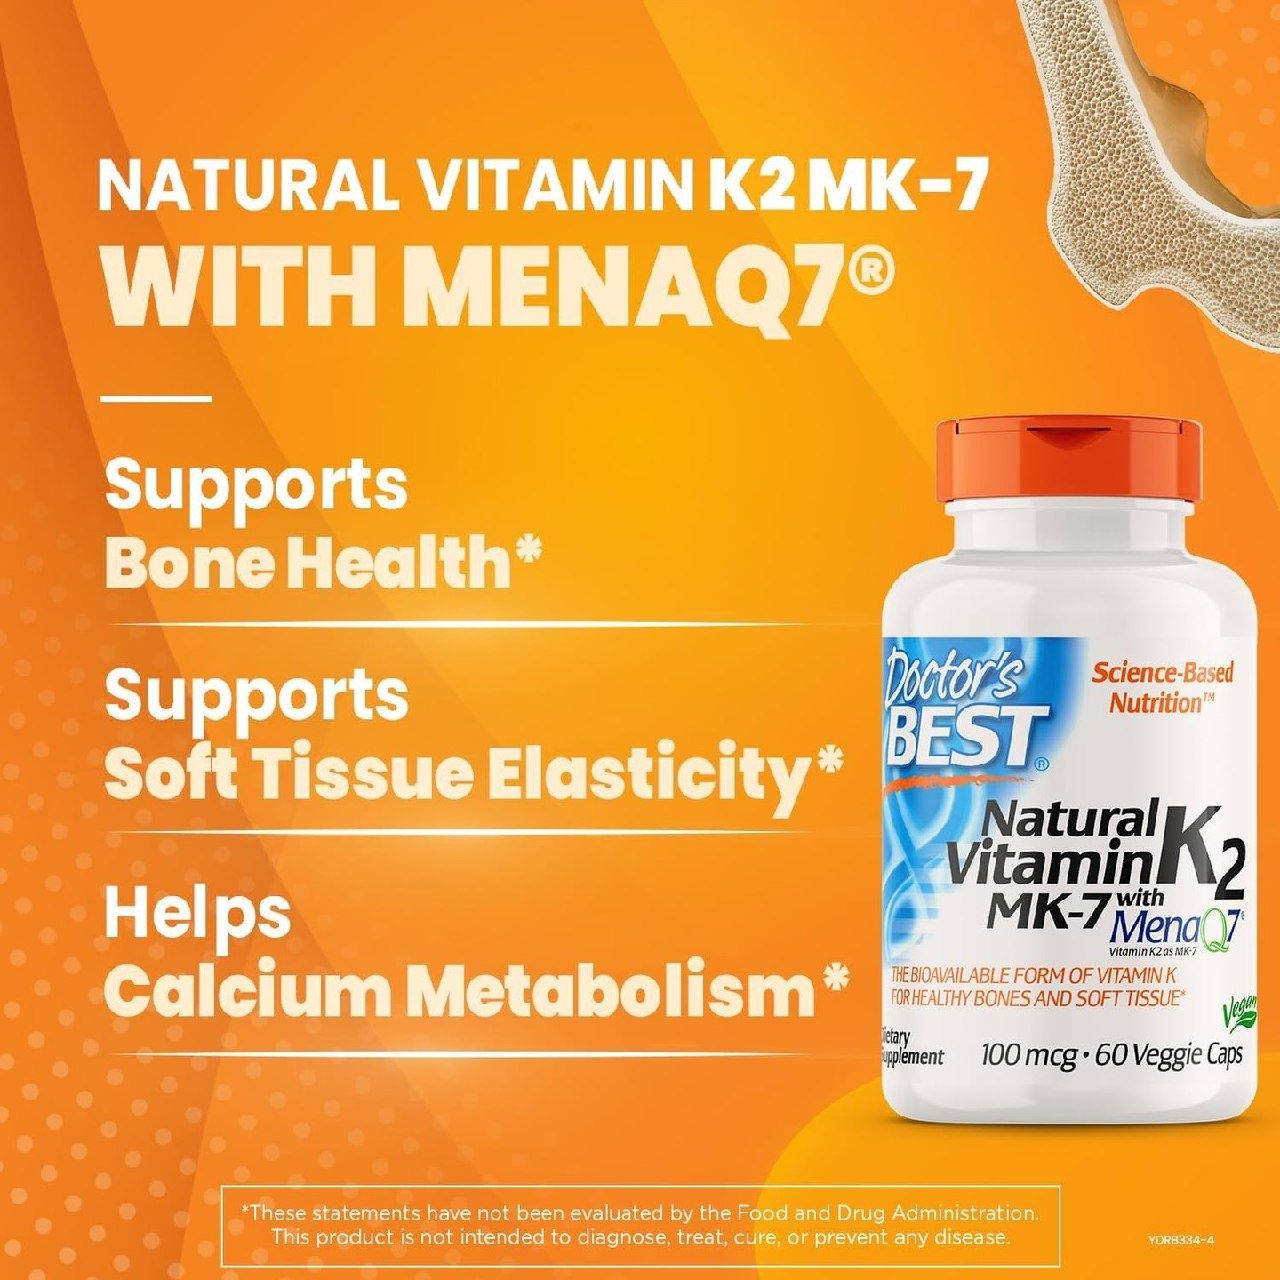 Doctor's Best Natural Витамин K2 Mk-7 с MenaQ7, 100 мкг добавки